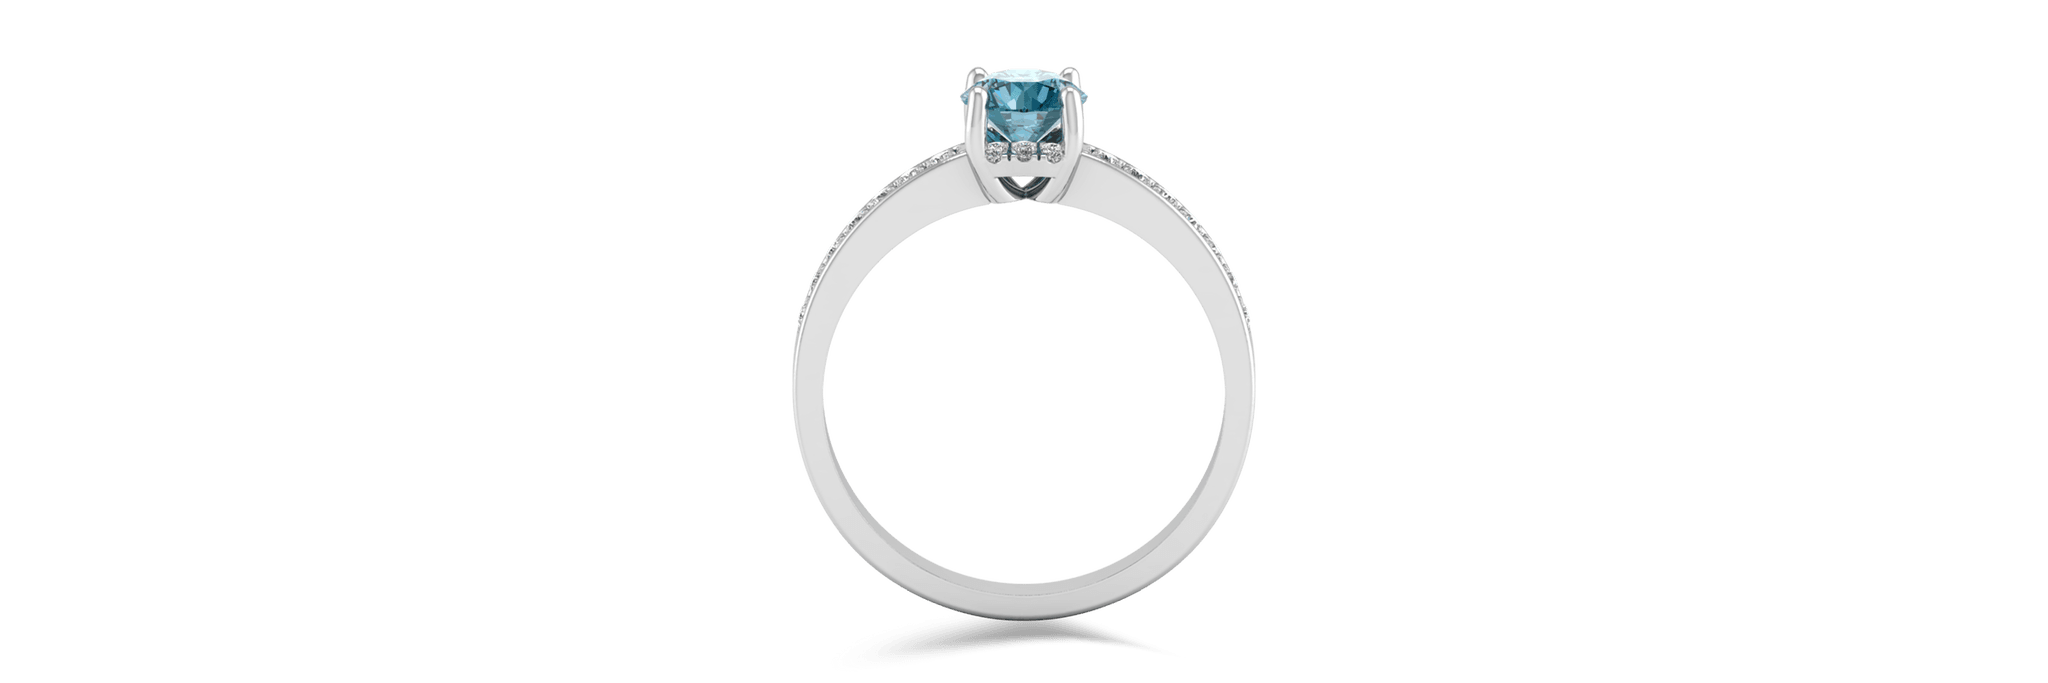 Inel de logodna din aur alb de 18K cu diamant albastru de 0.33ct si diamante de 0.16ct